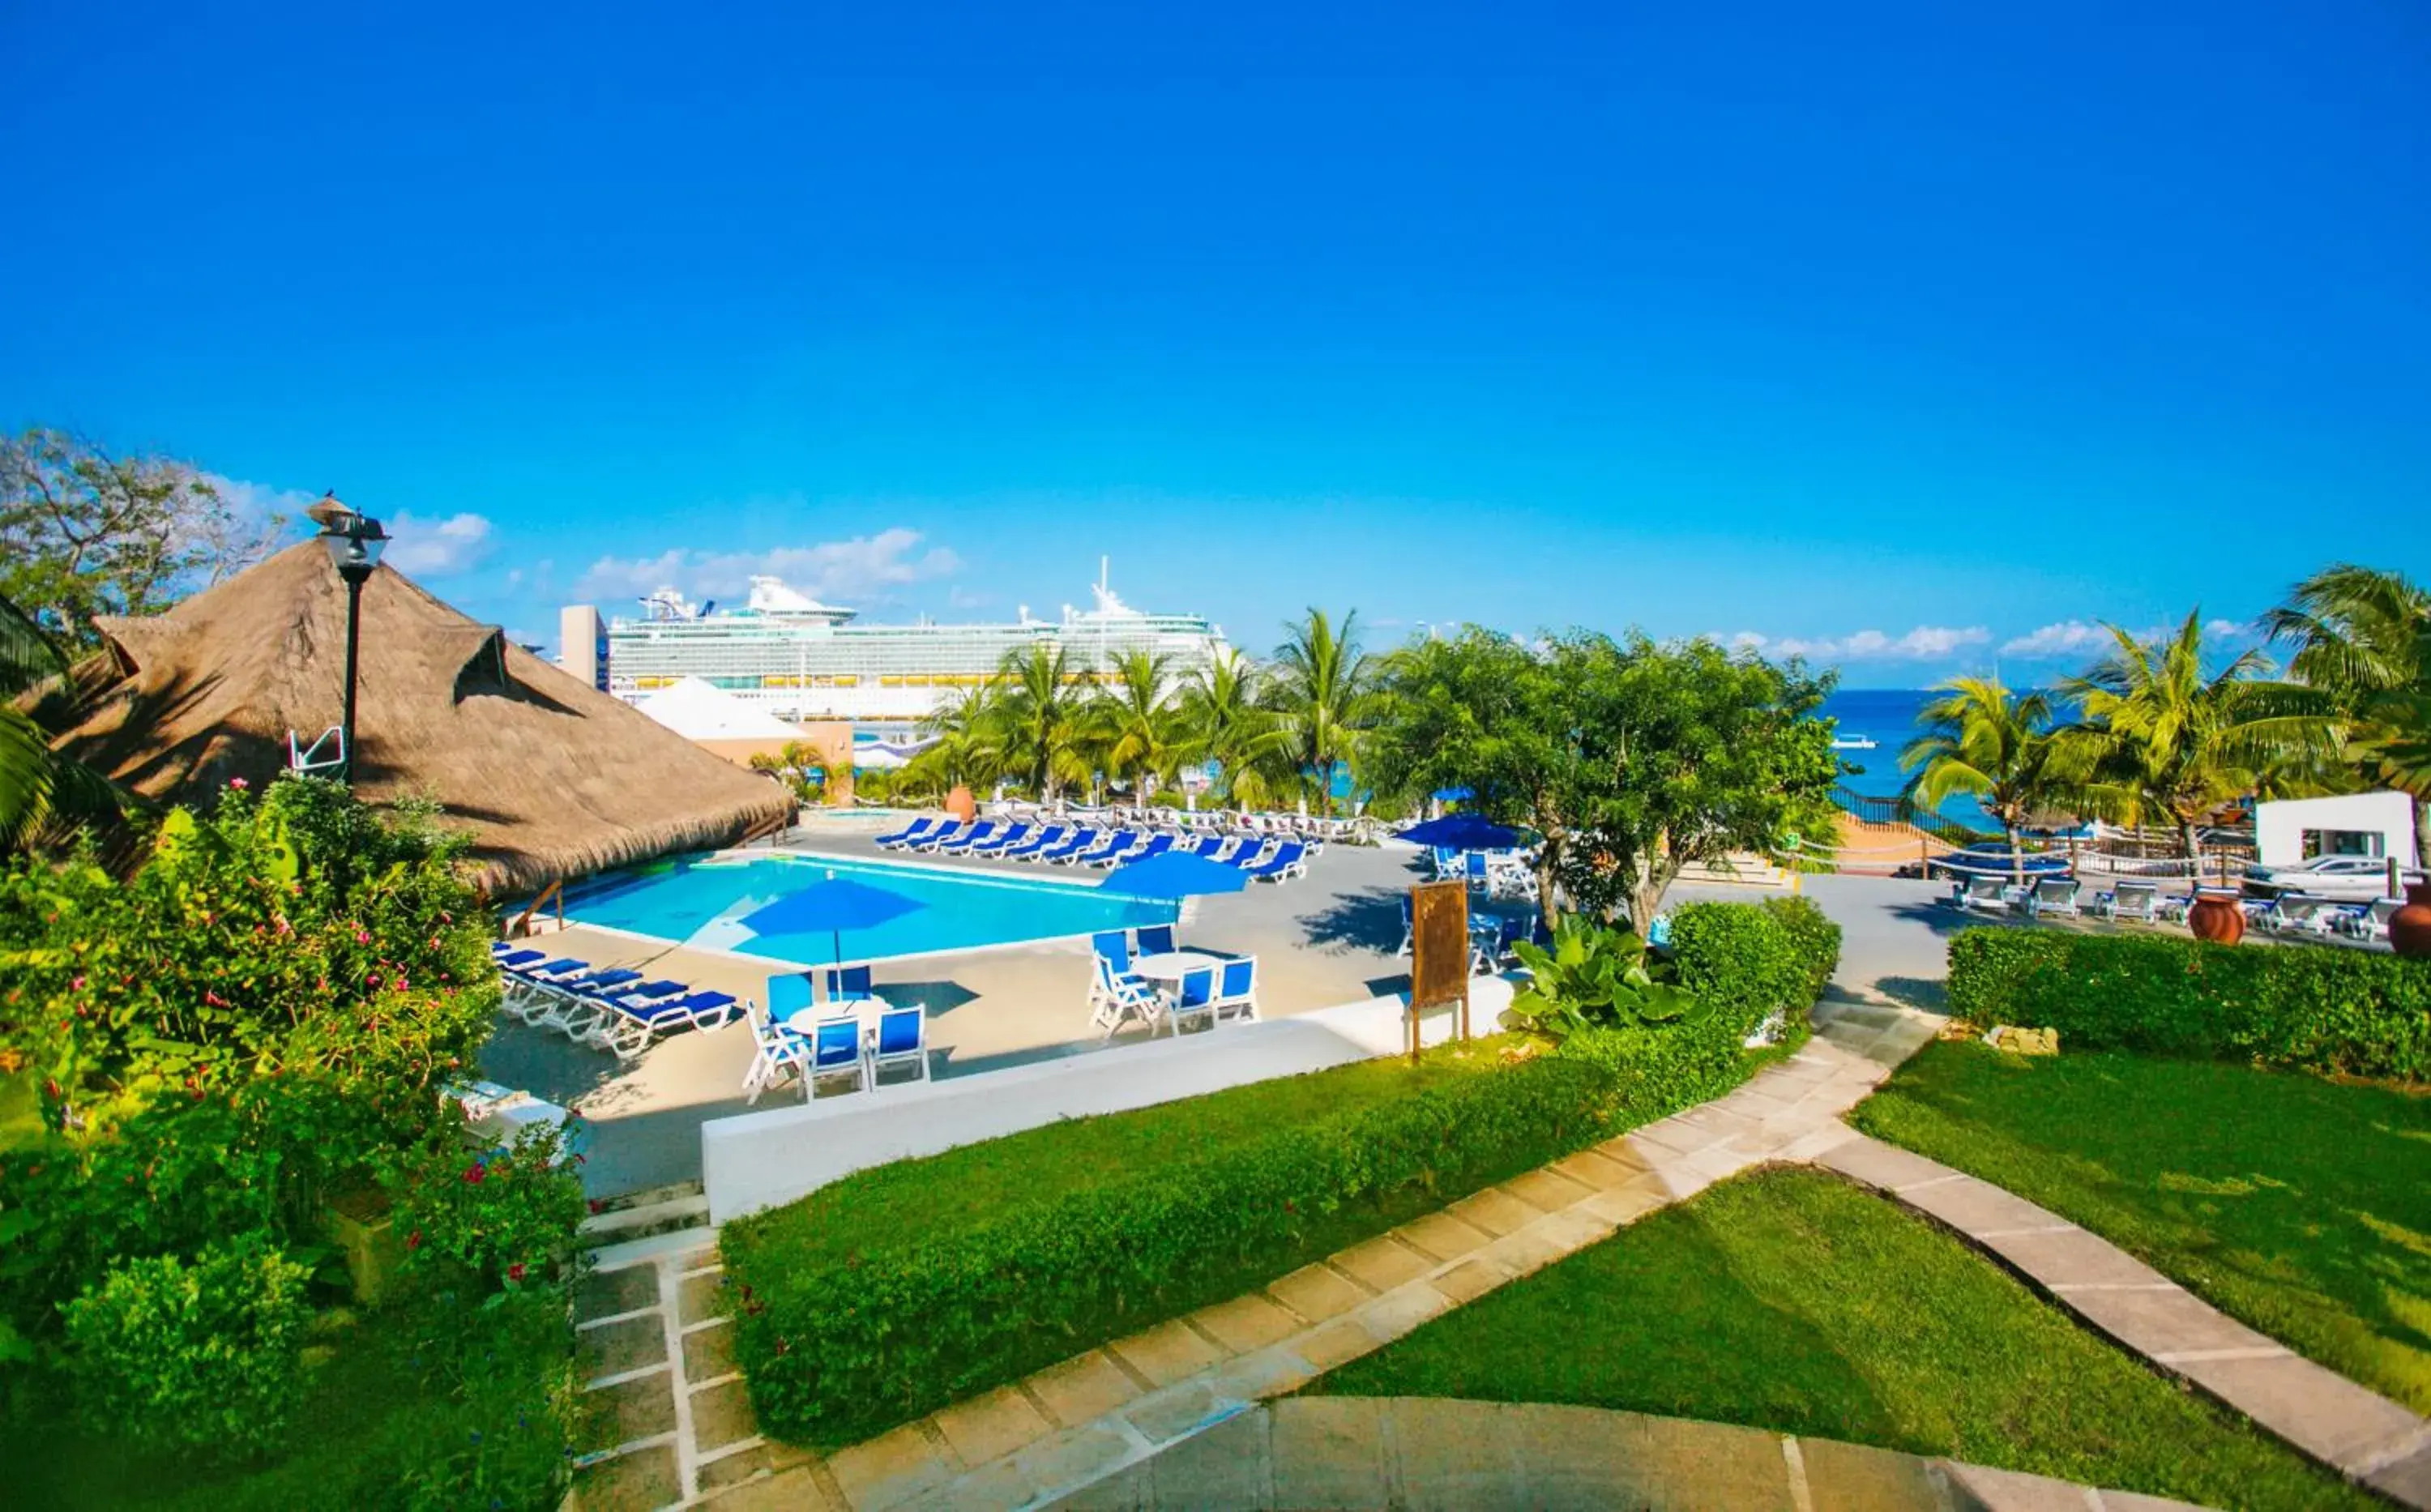 Garden, Pool View in Casa del Mar Cozumel Hotel & Dive Resort